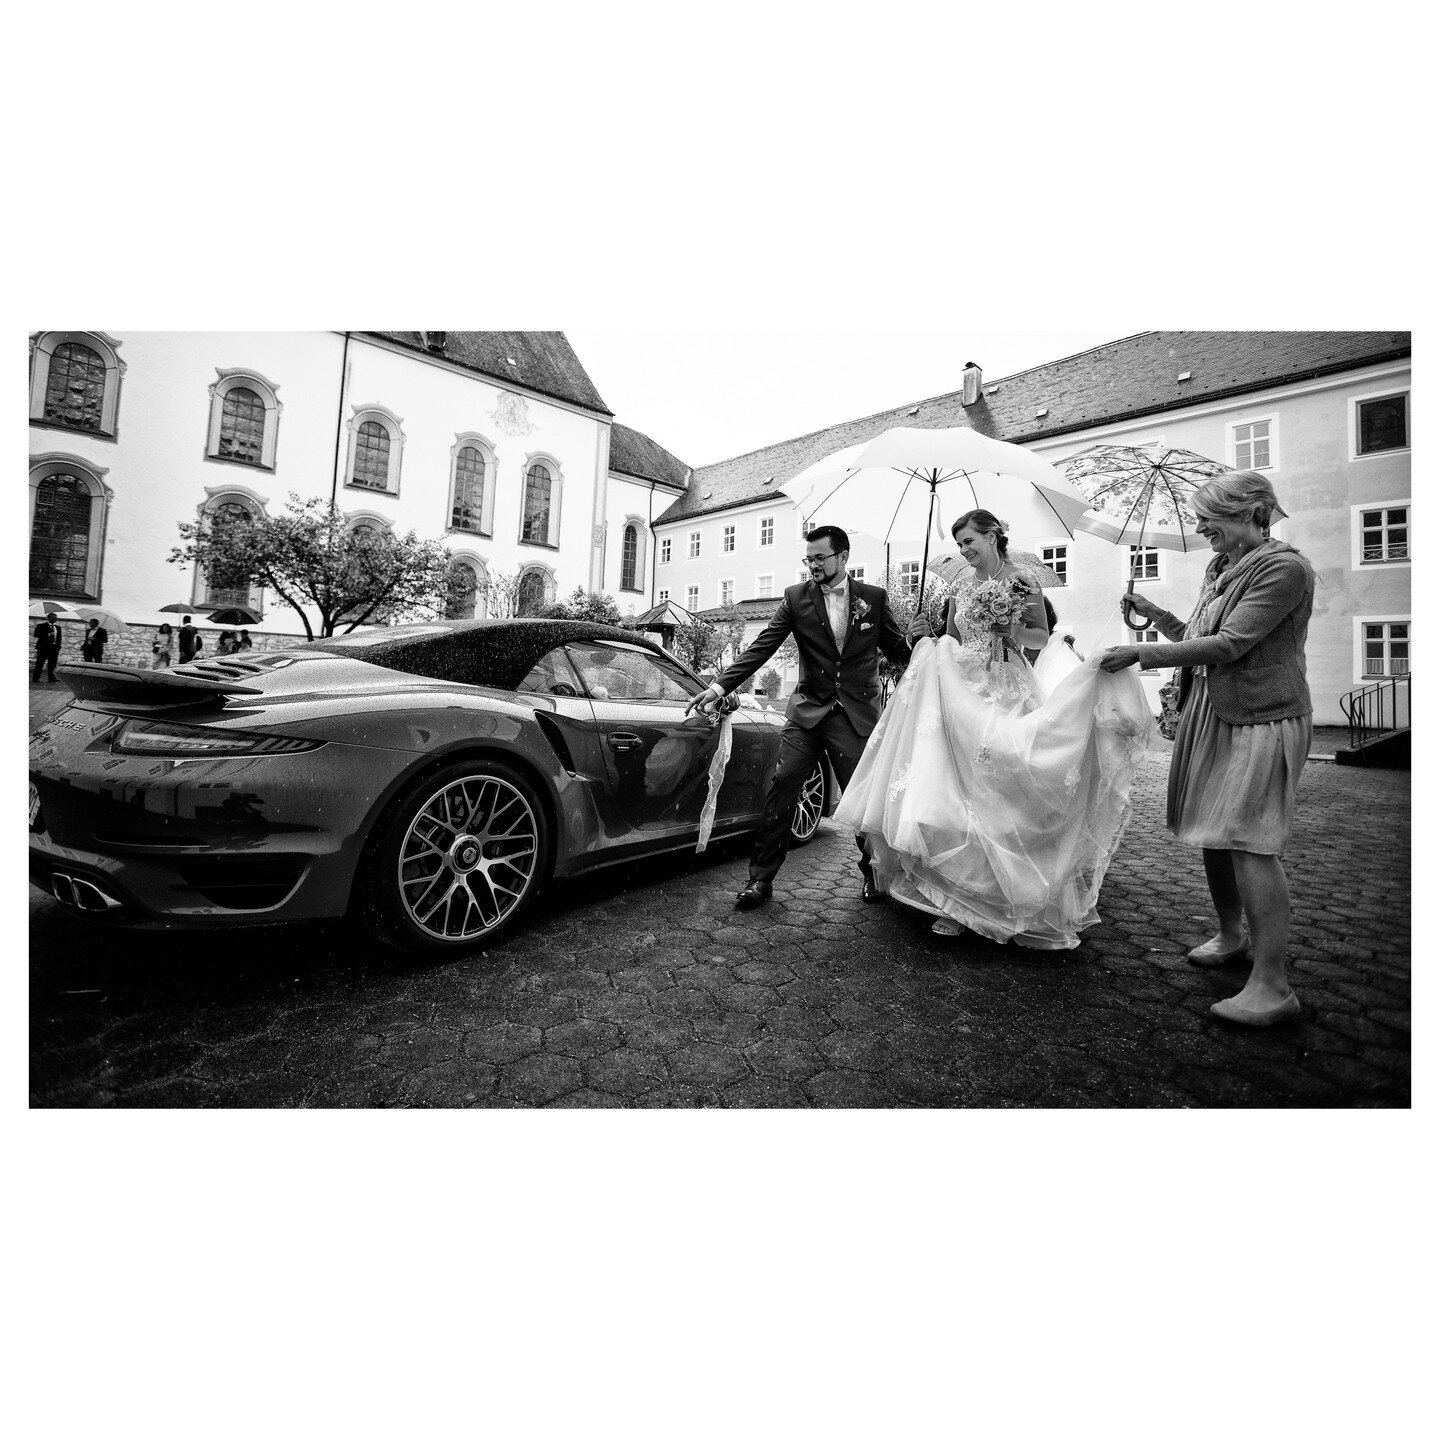 Dietramszell

#wedding #bride #love #weddingphotography #weddingdress #weddingday #weddinginspiration #weddingplanner #bridetobe #bridal #prewedding #weddingphotographer #weddings #groom #weddinginspo #marriage #weddingsalzburg #hochzeit #hochzeitskl